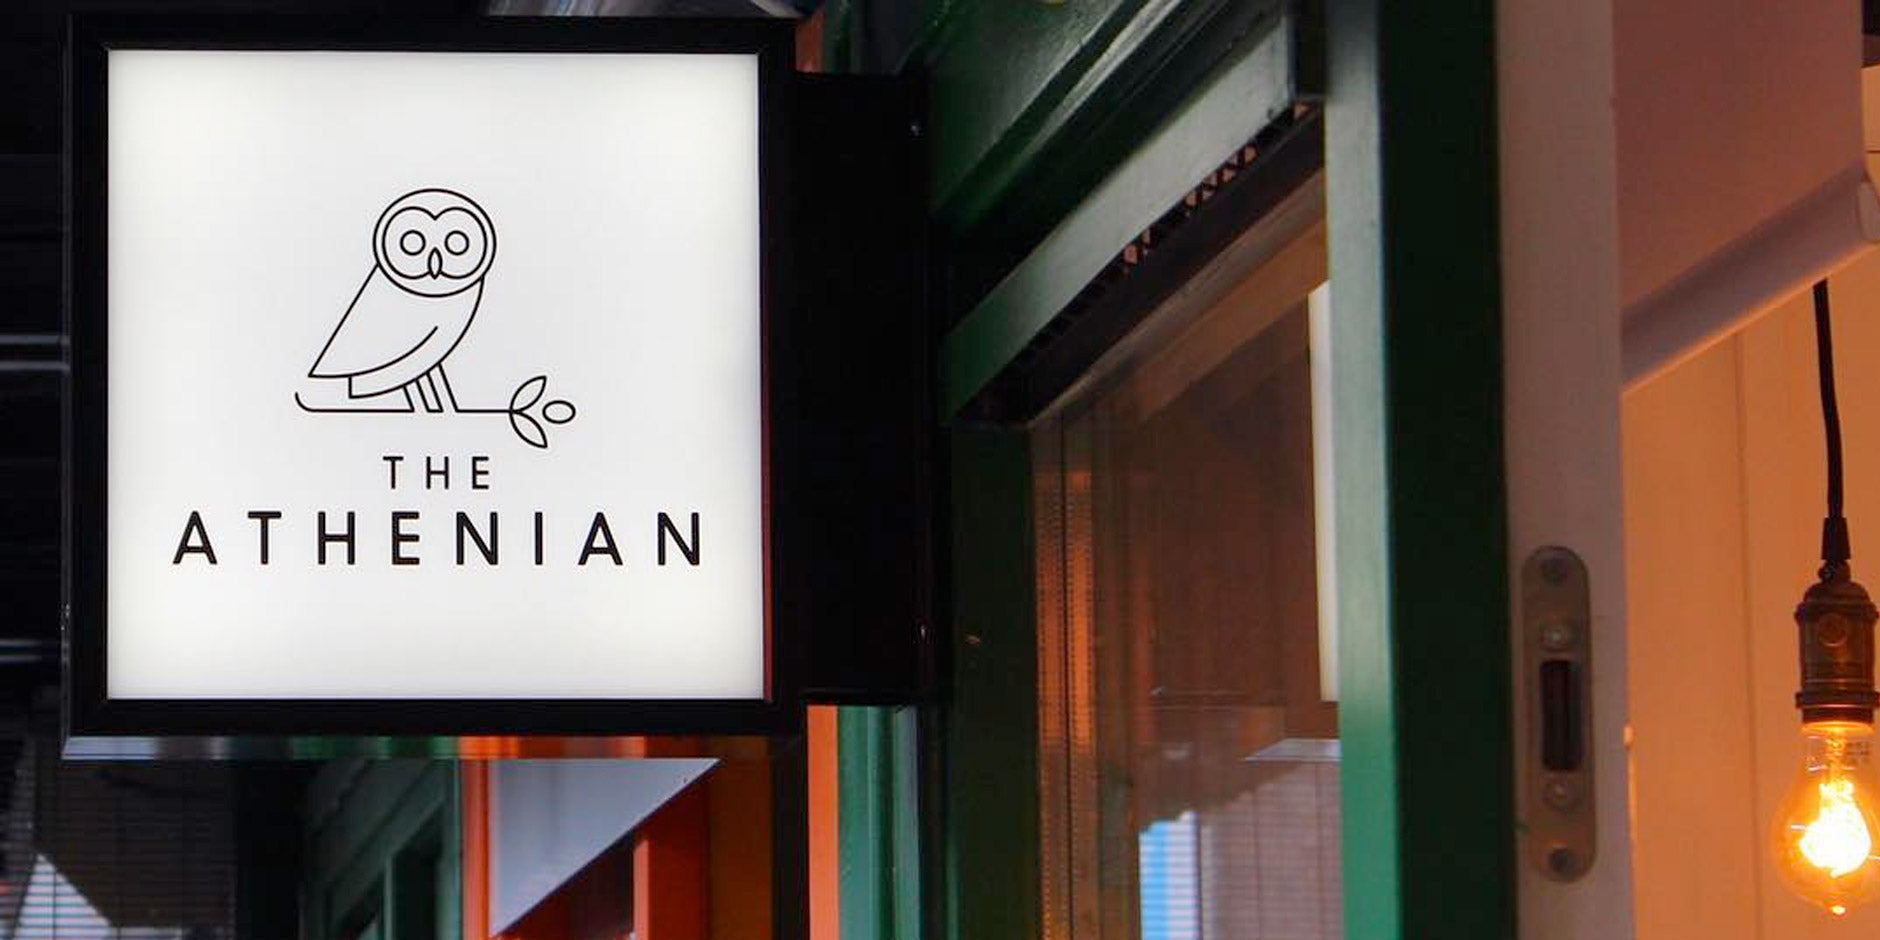 the anthenian restaurant sign